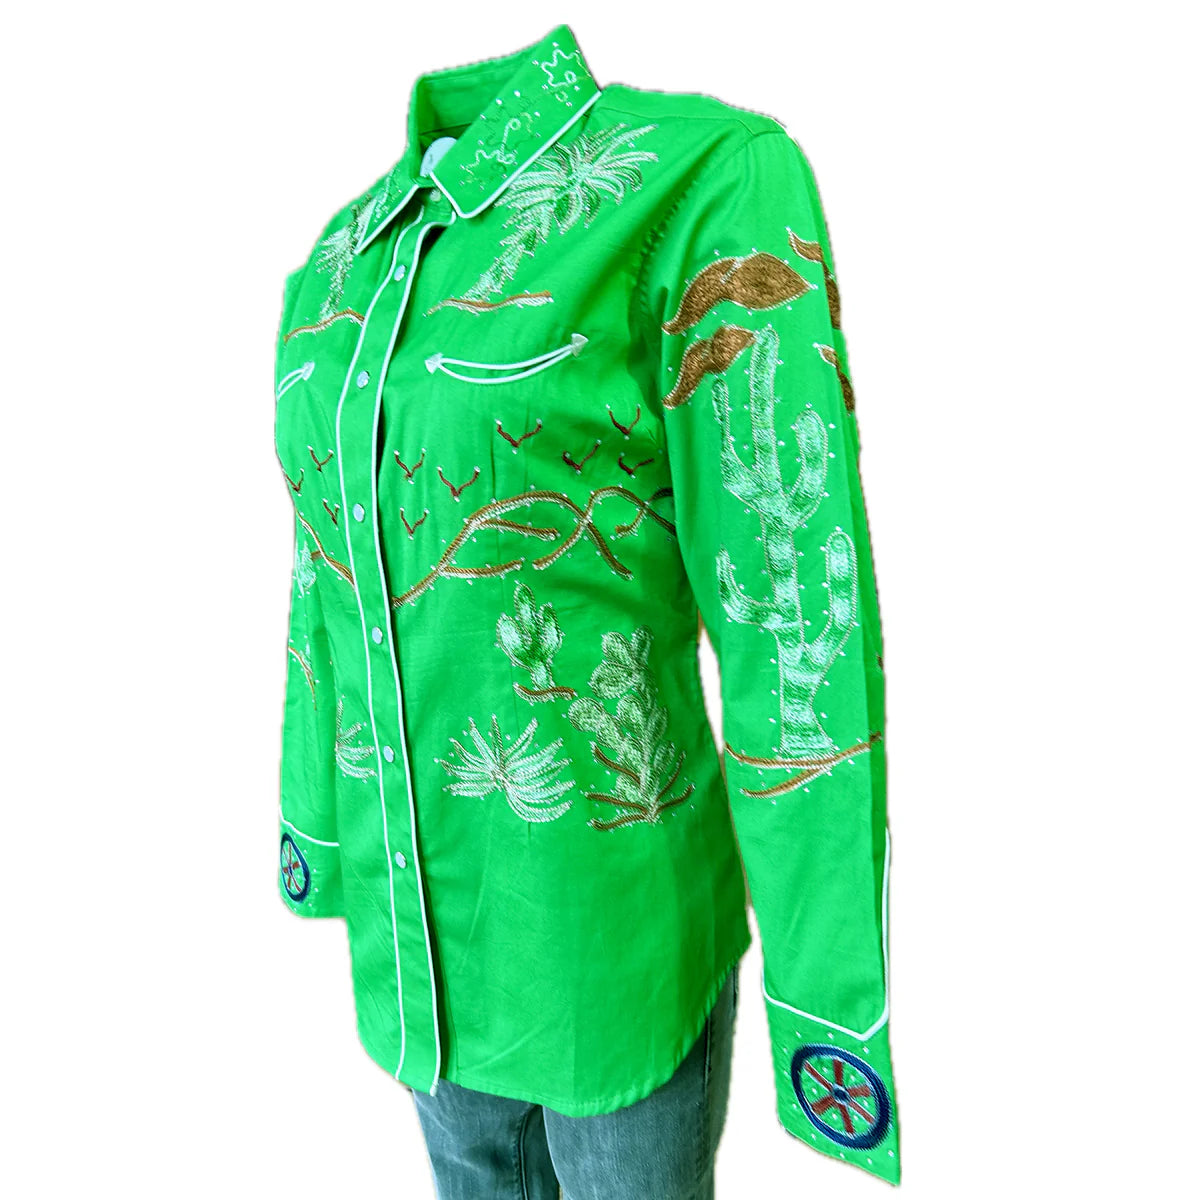 Rockmount Ranch Wear Ladies' #7755 Palm Trees Wagon Wheels Shirt Green Front